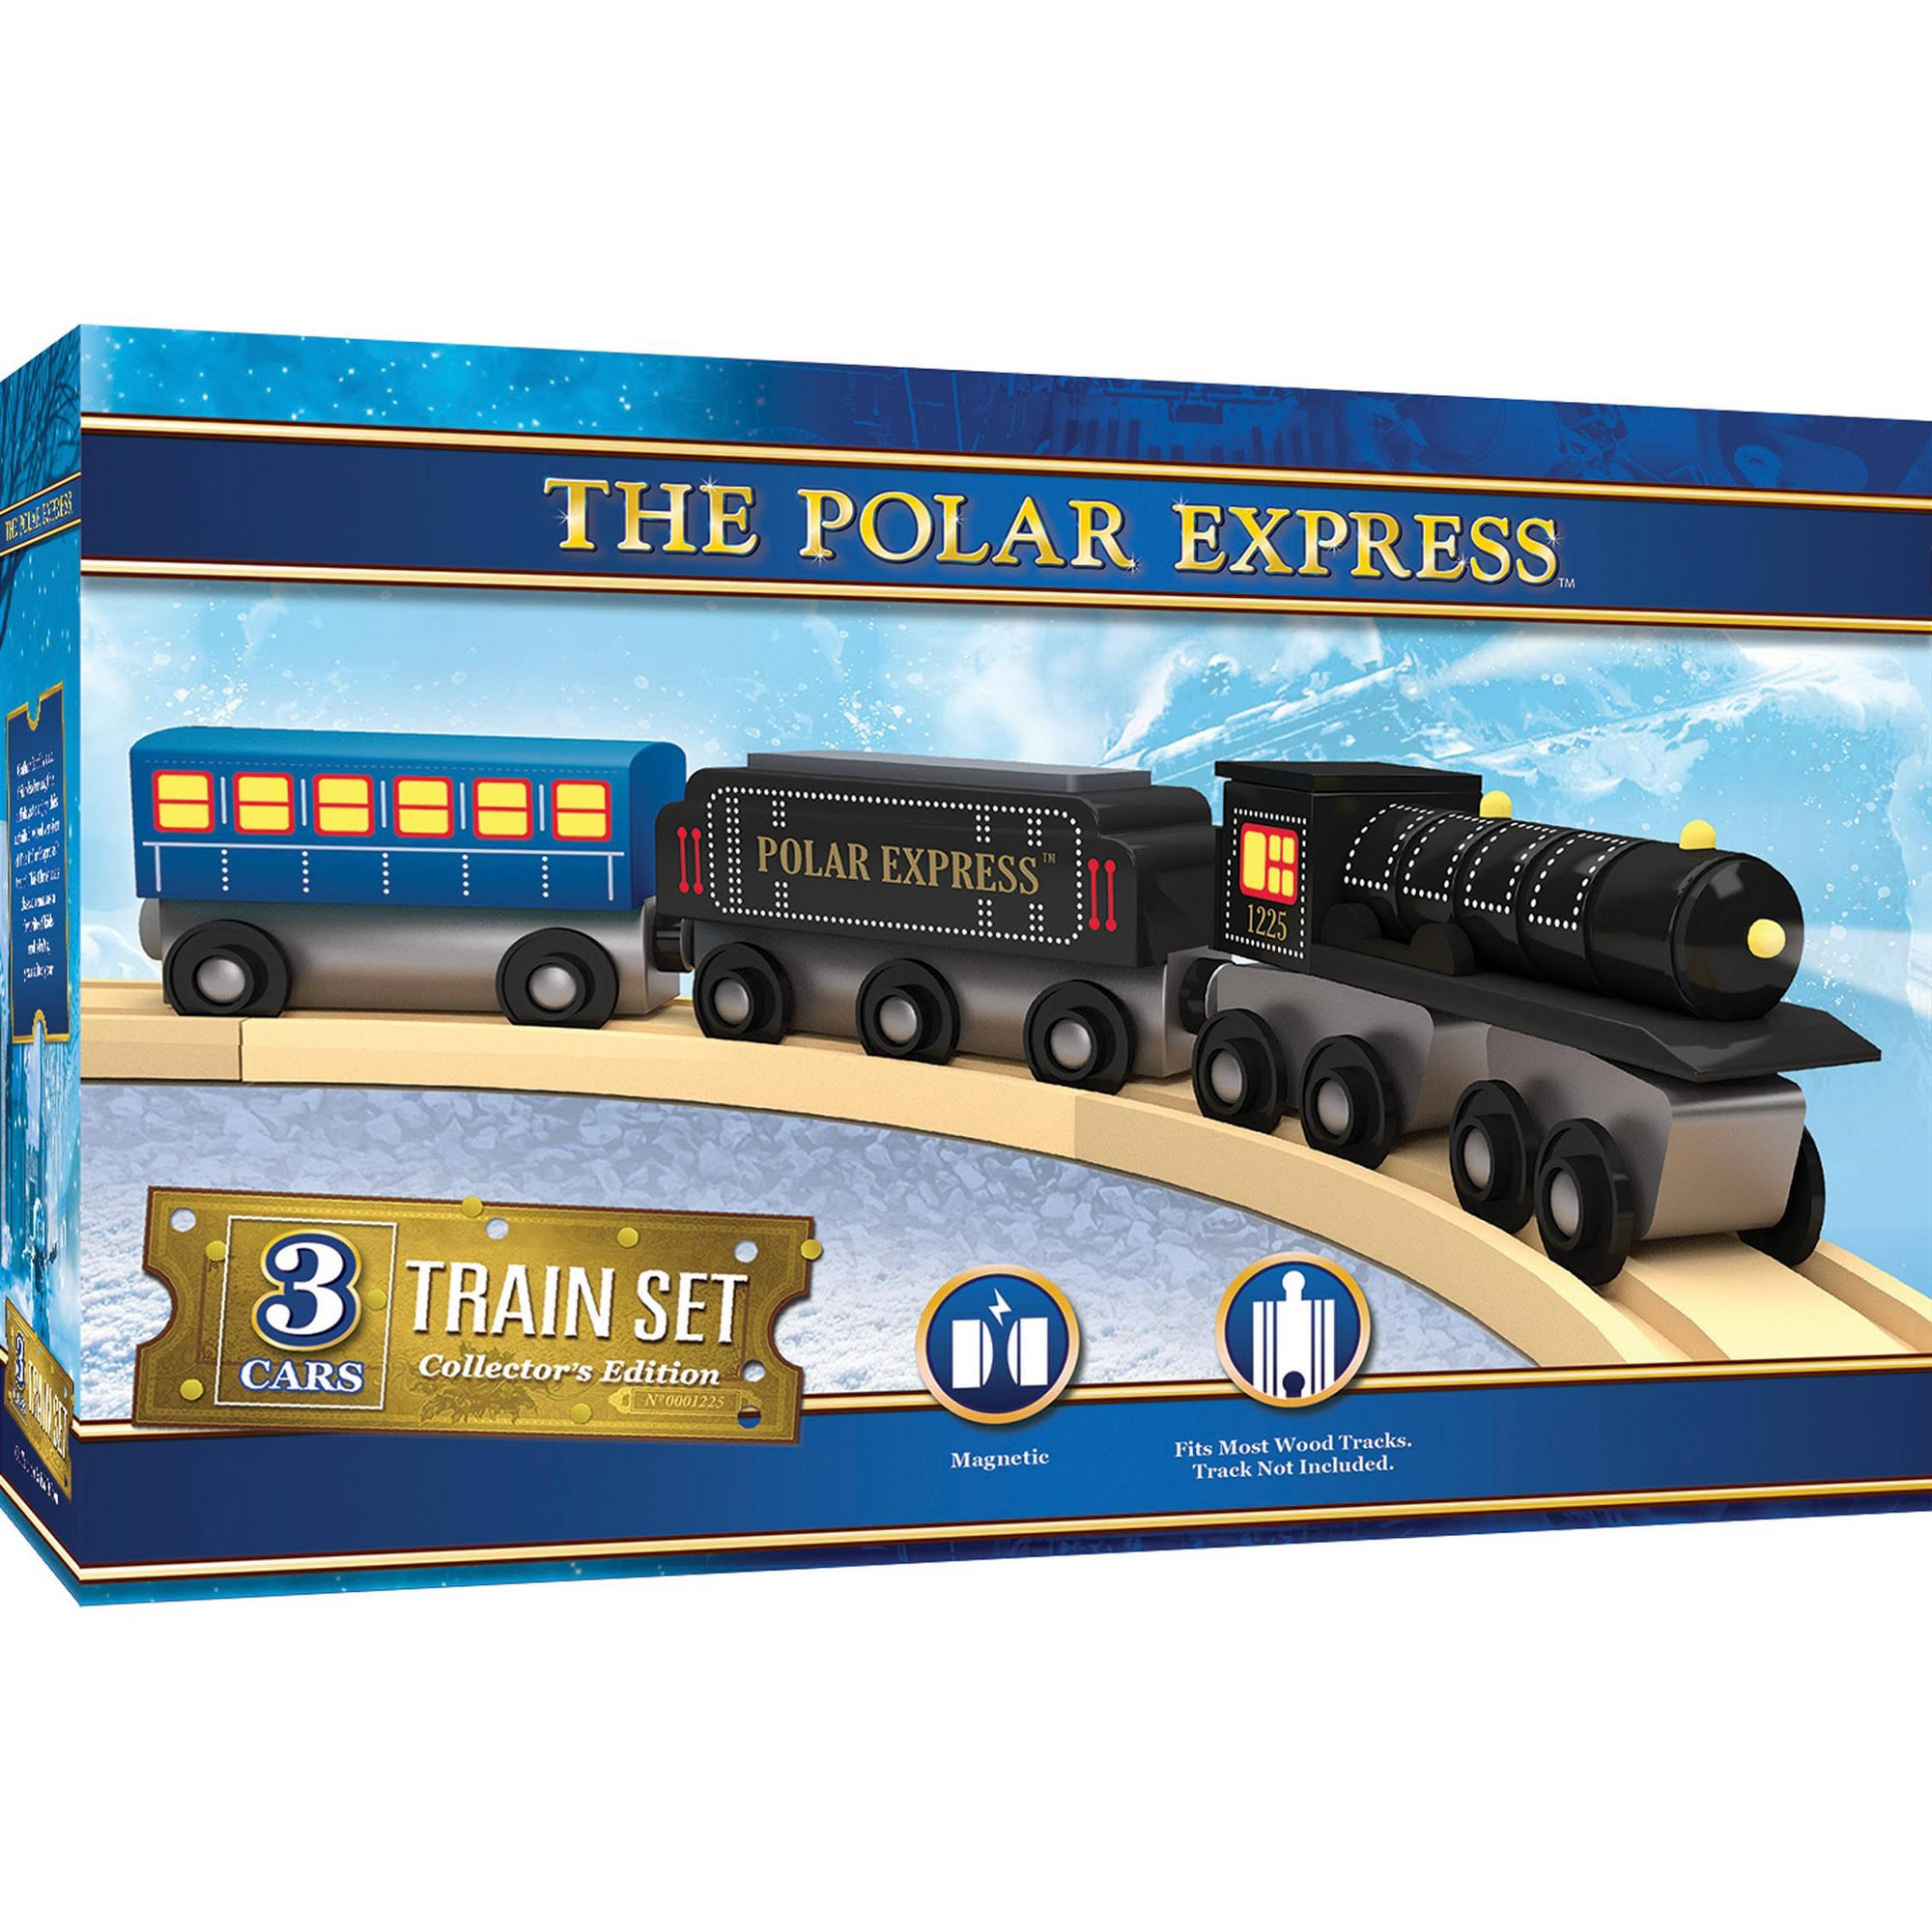 The Polar Express Wooden Train Toy Set